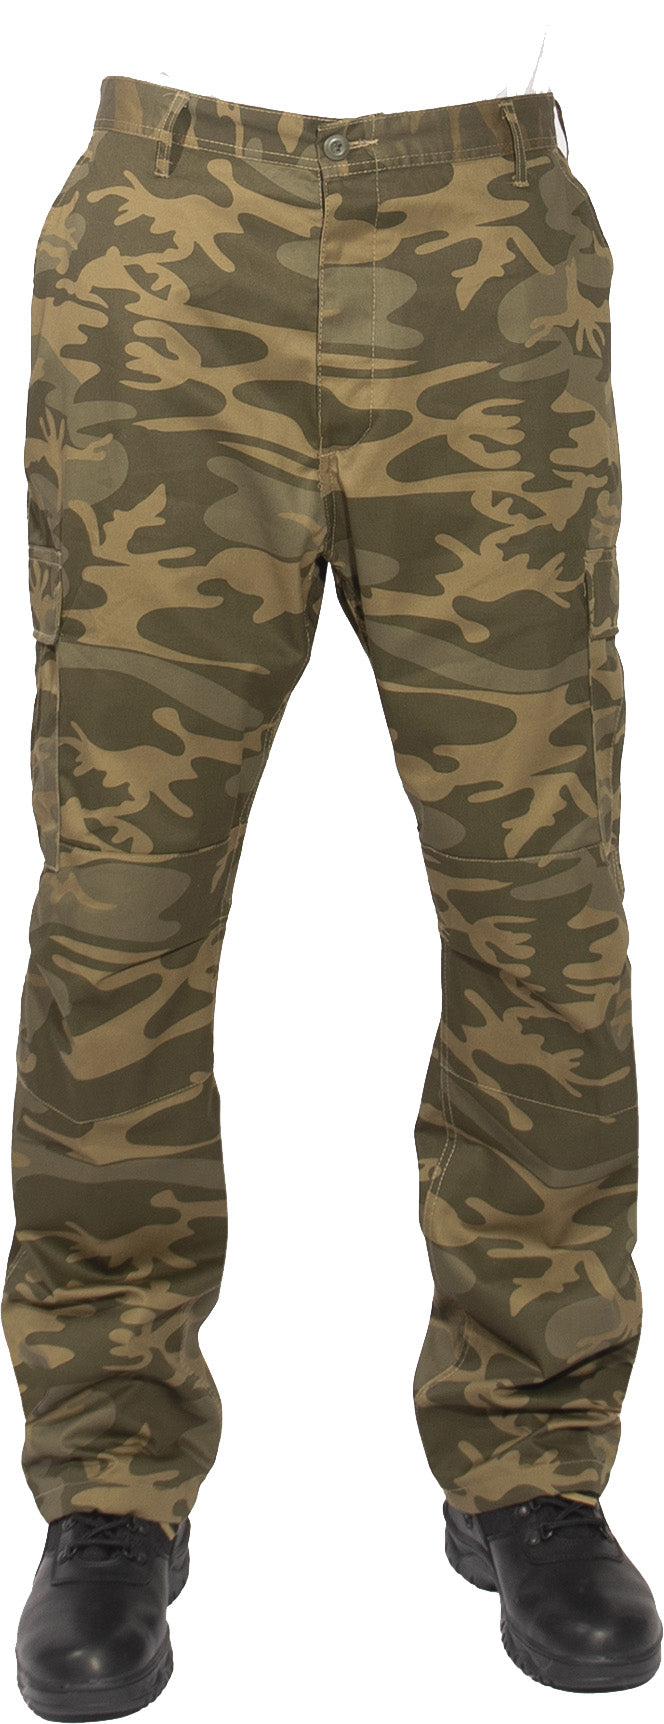 Coyote Camo - Color Camo Tactical BDU Pants - Army Navy Store